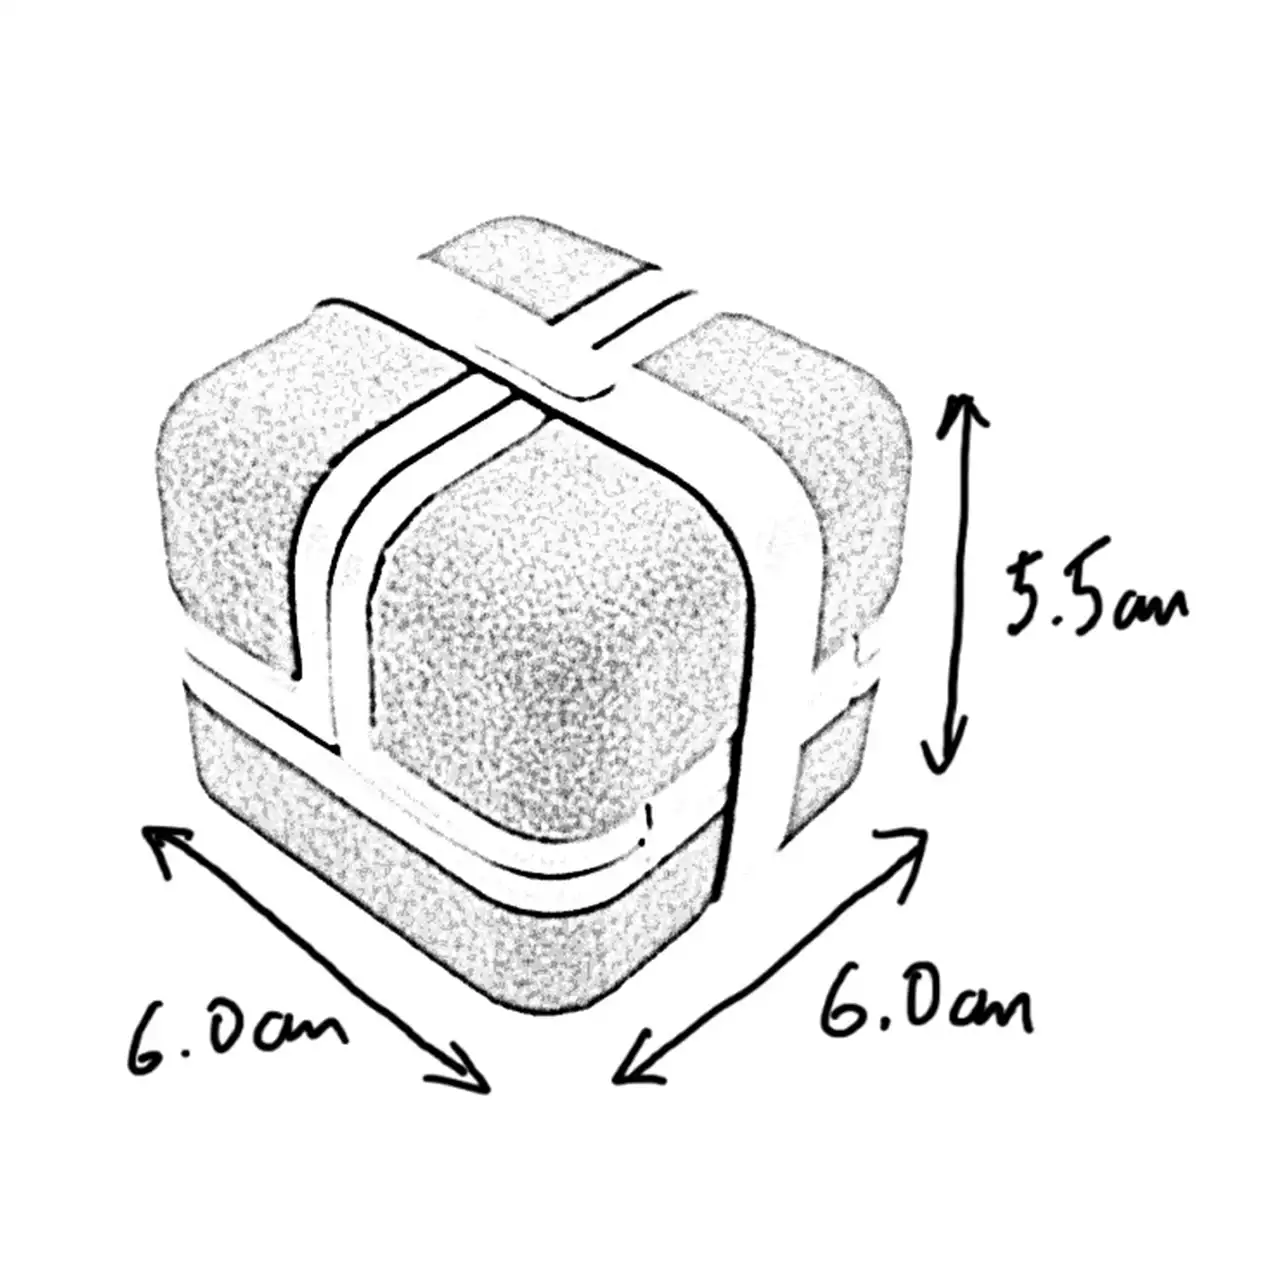 valerie ring box dimensions